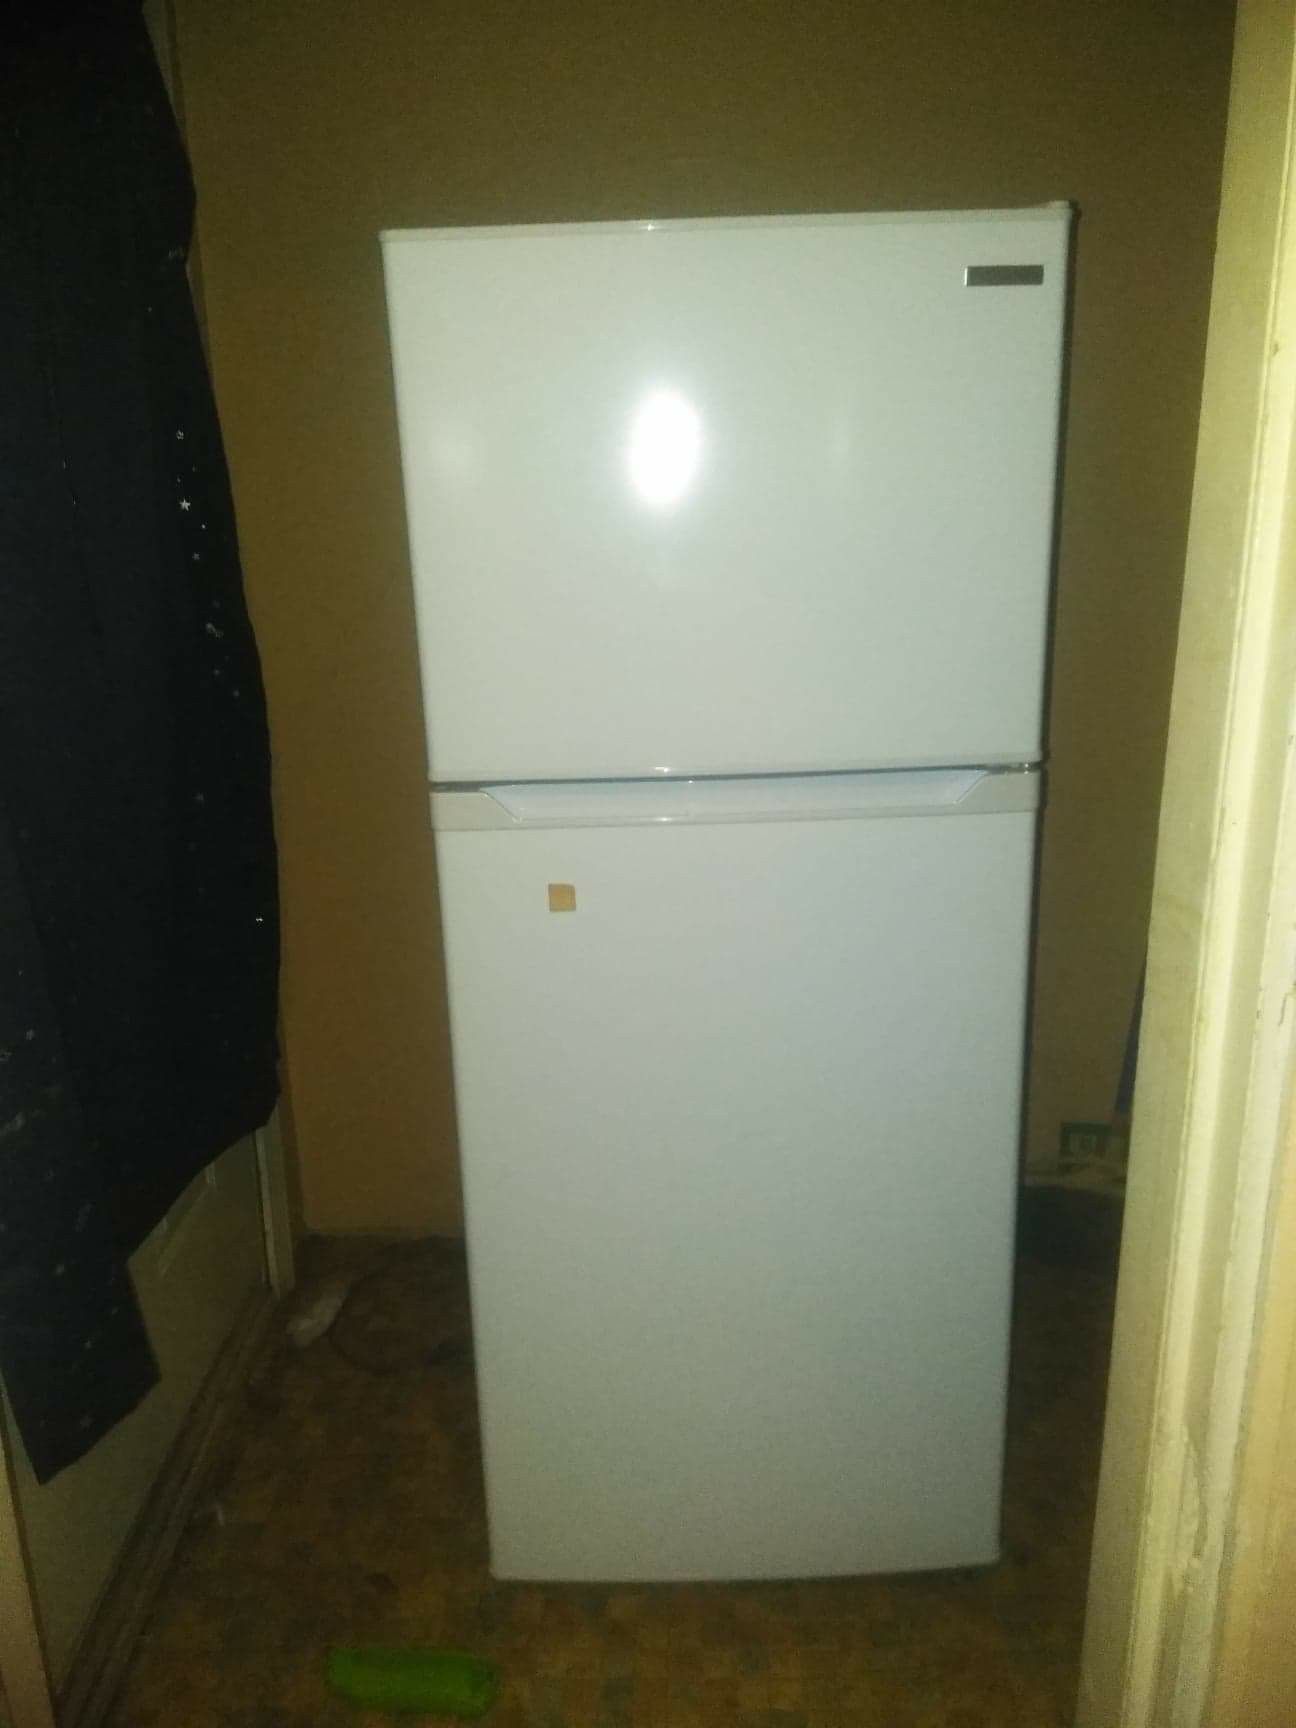 Infinity refrigerator